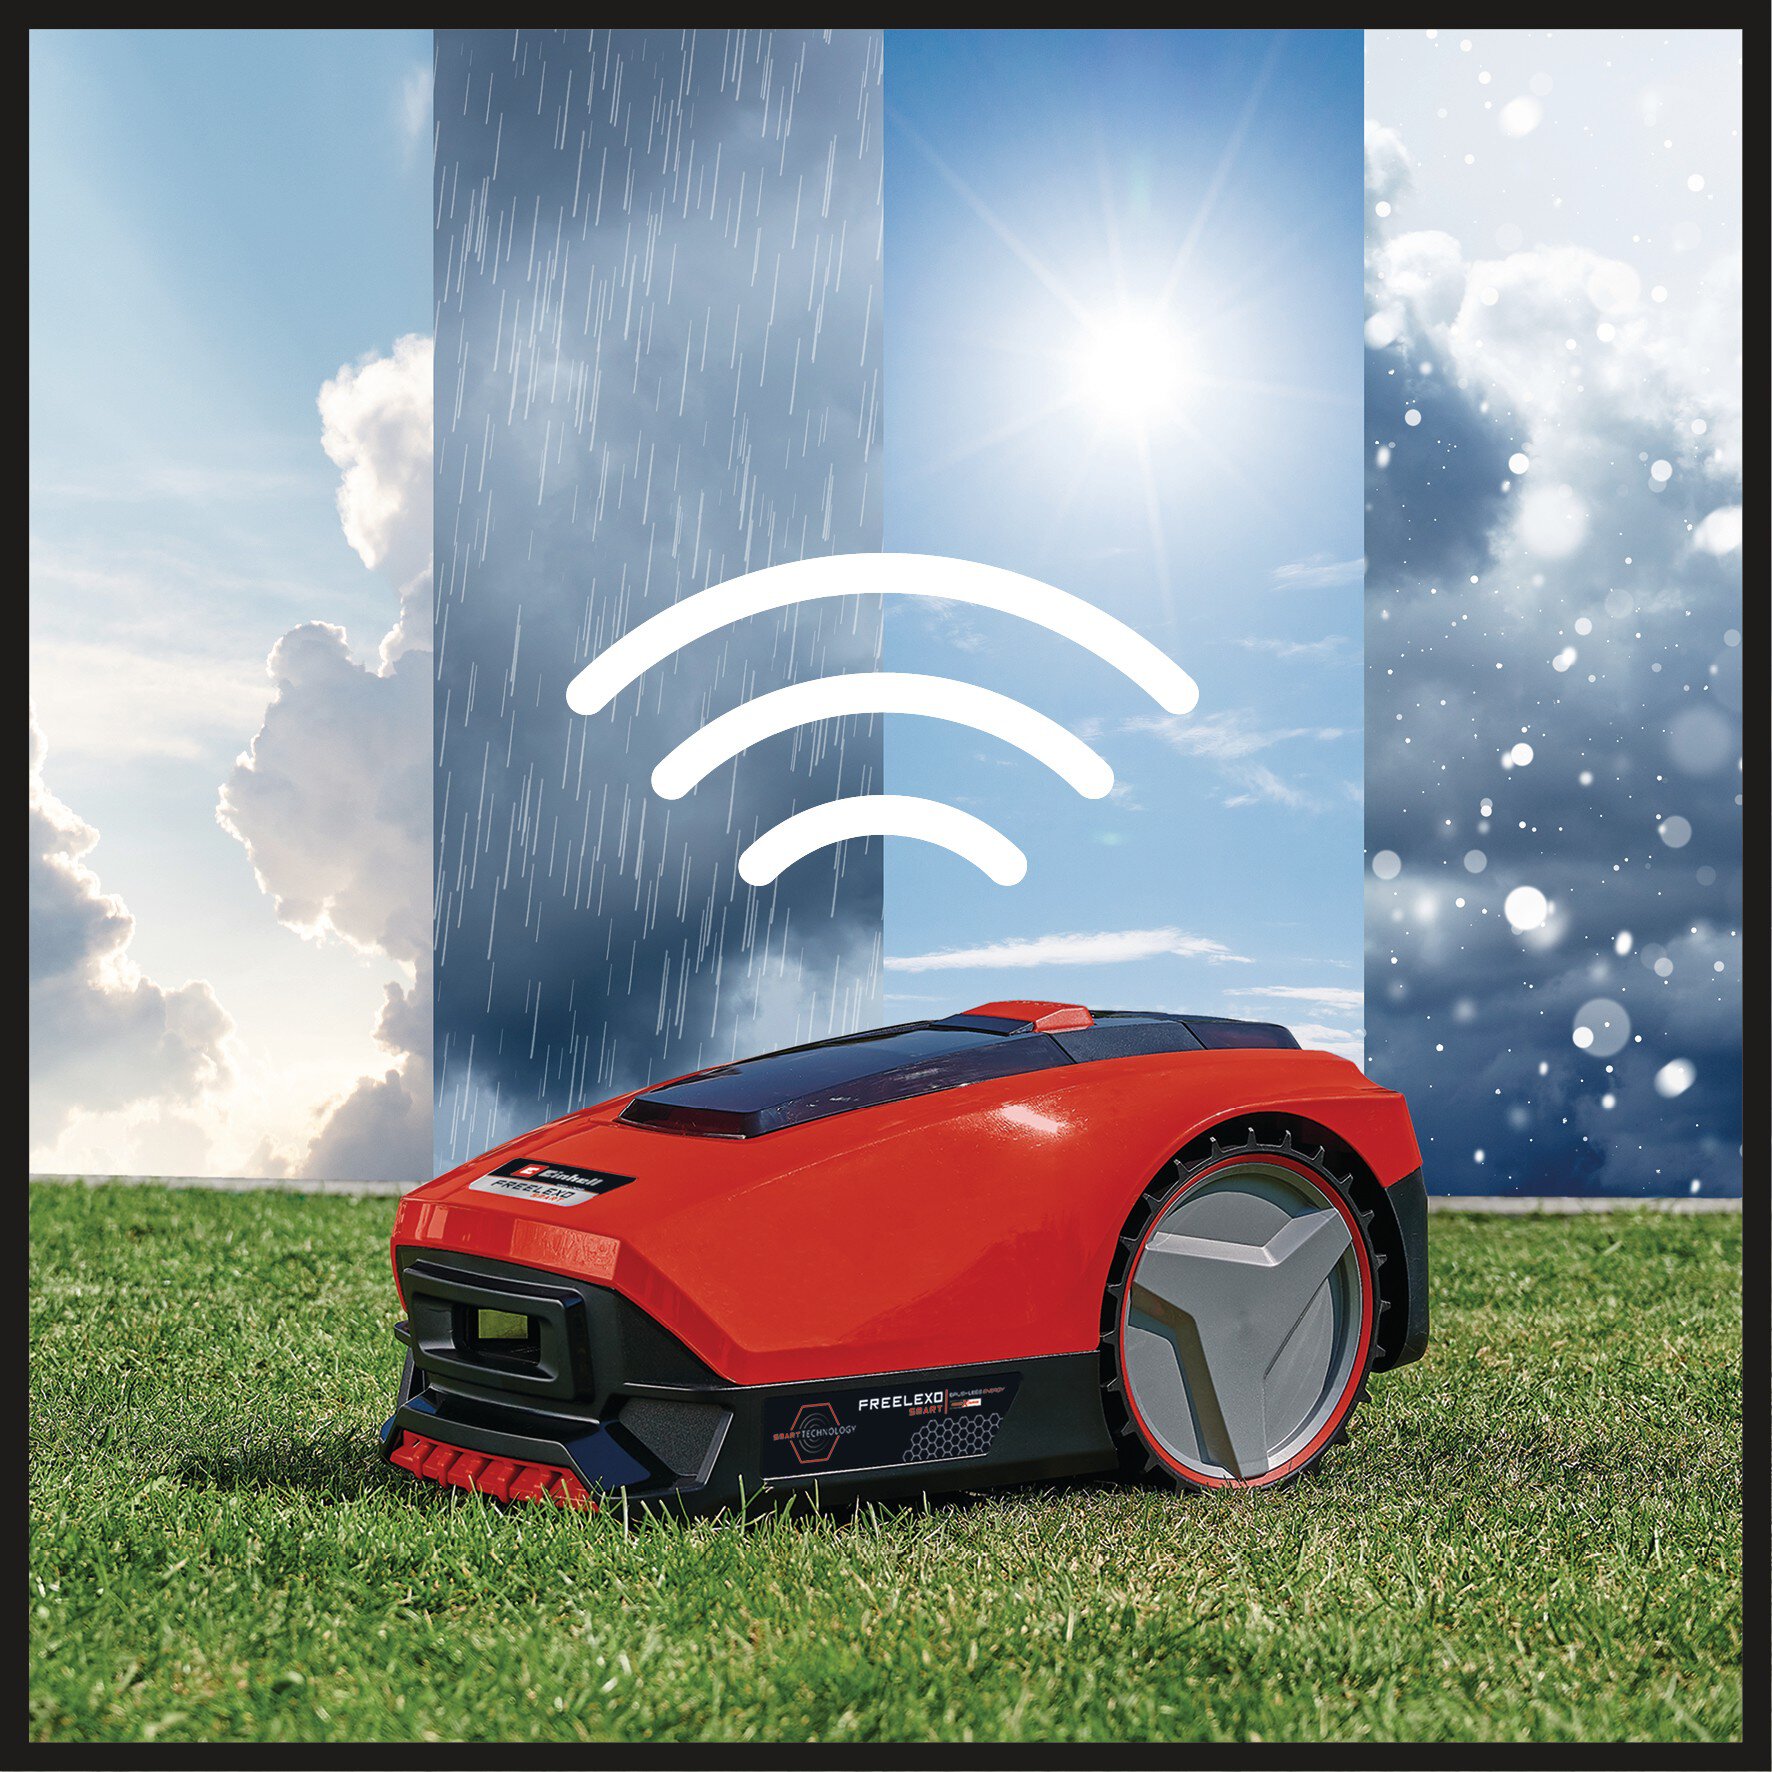 einhell-professional-robot-lawn-mower-3413811-detail_image-001